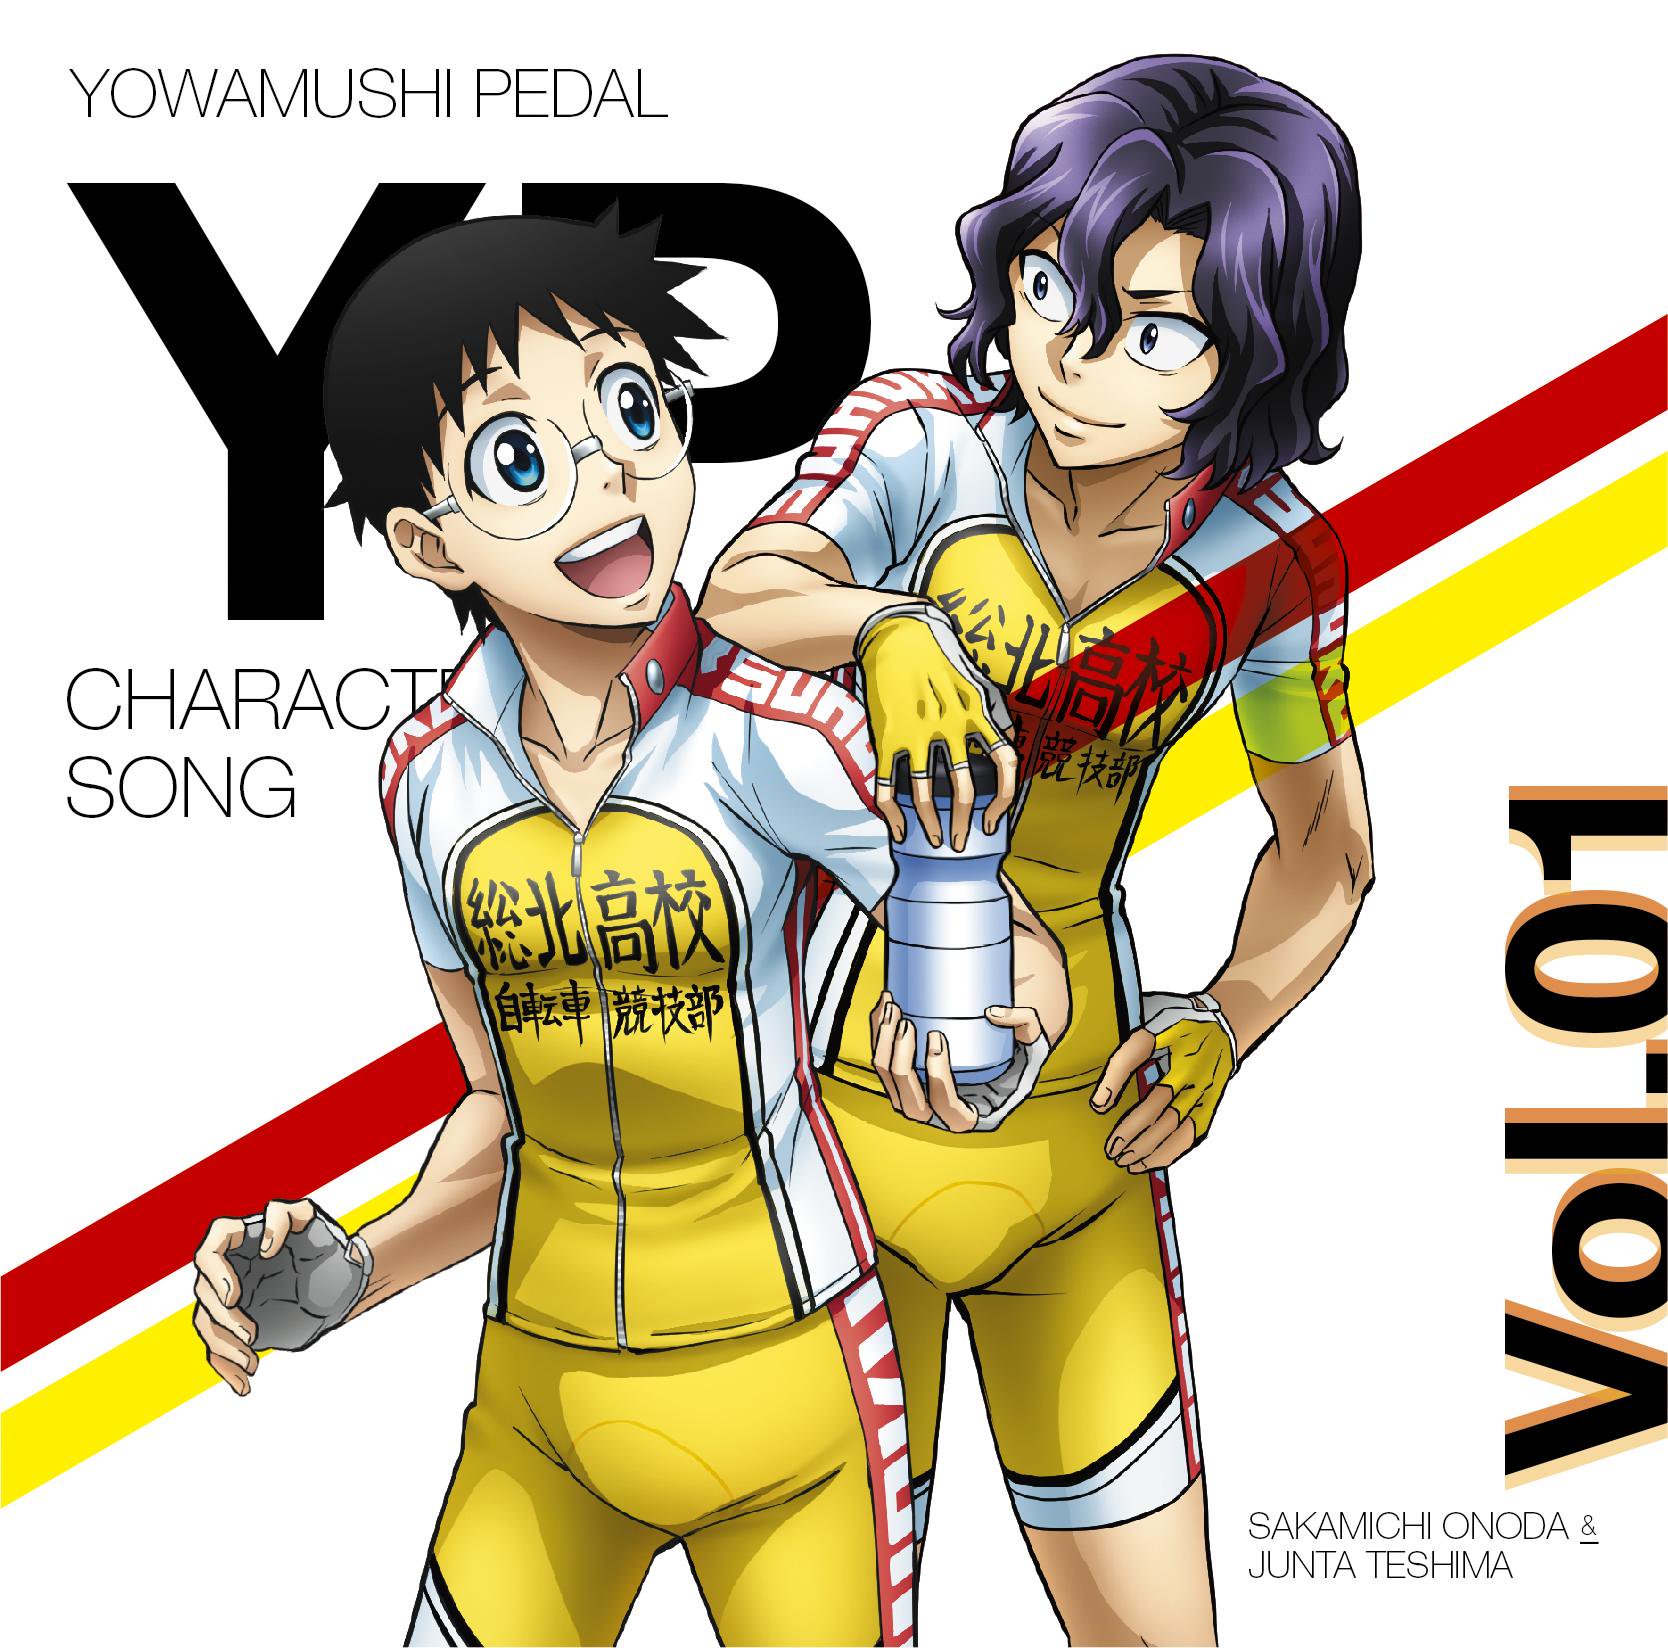  Yowamushi Pedal LIMIT BREAK First Press Limited Edition Vol. 1  - 3 : Musical Instruments